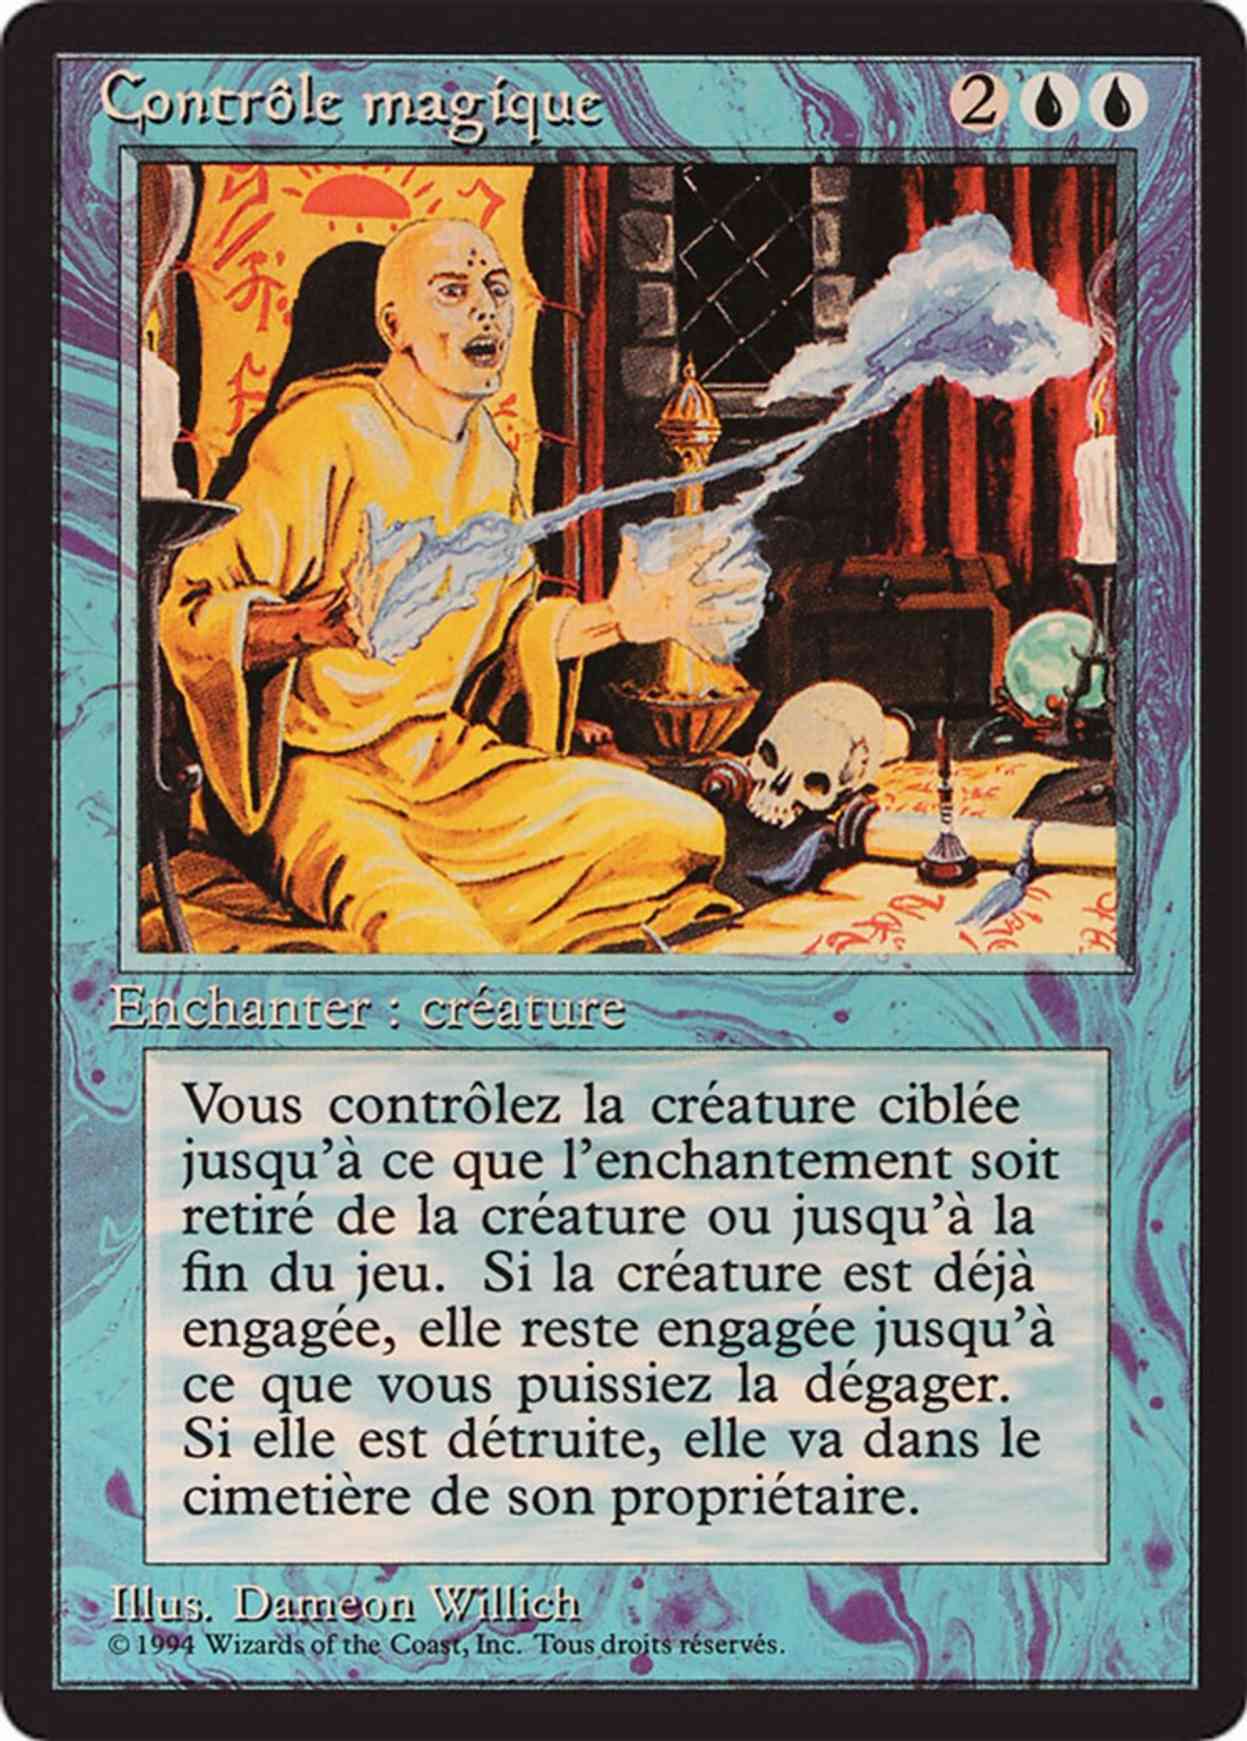 Control Magic magic card front